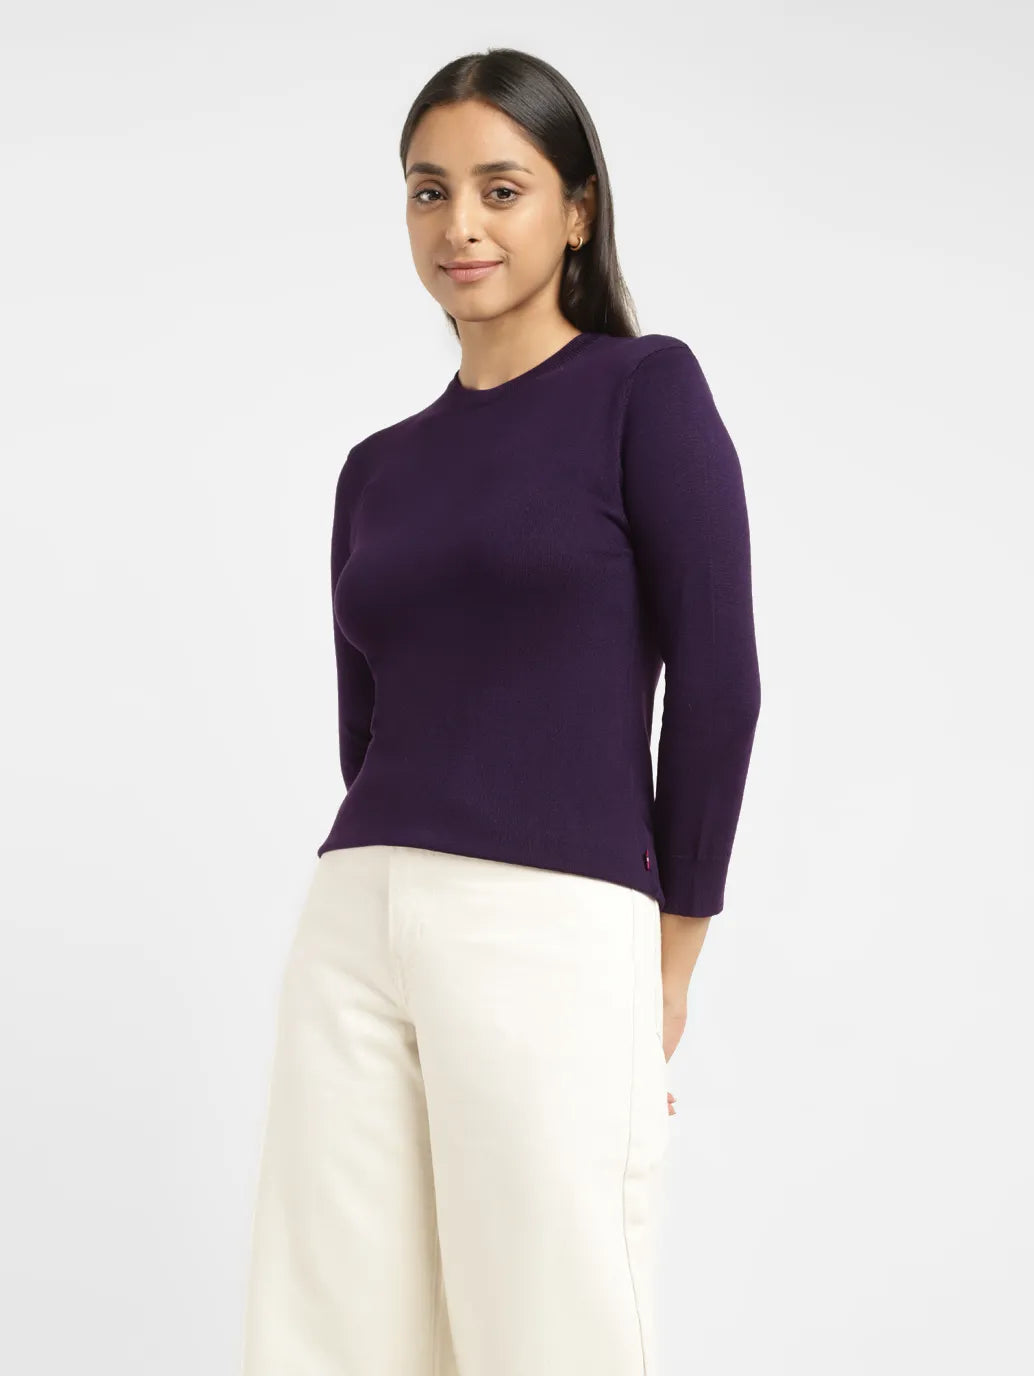 Women's Solid Purple Crew Neck Sweater